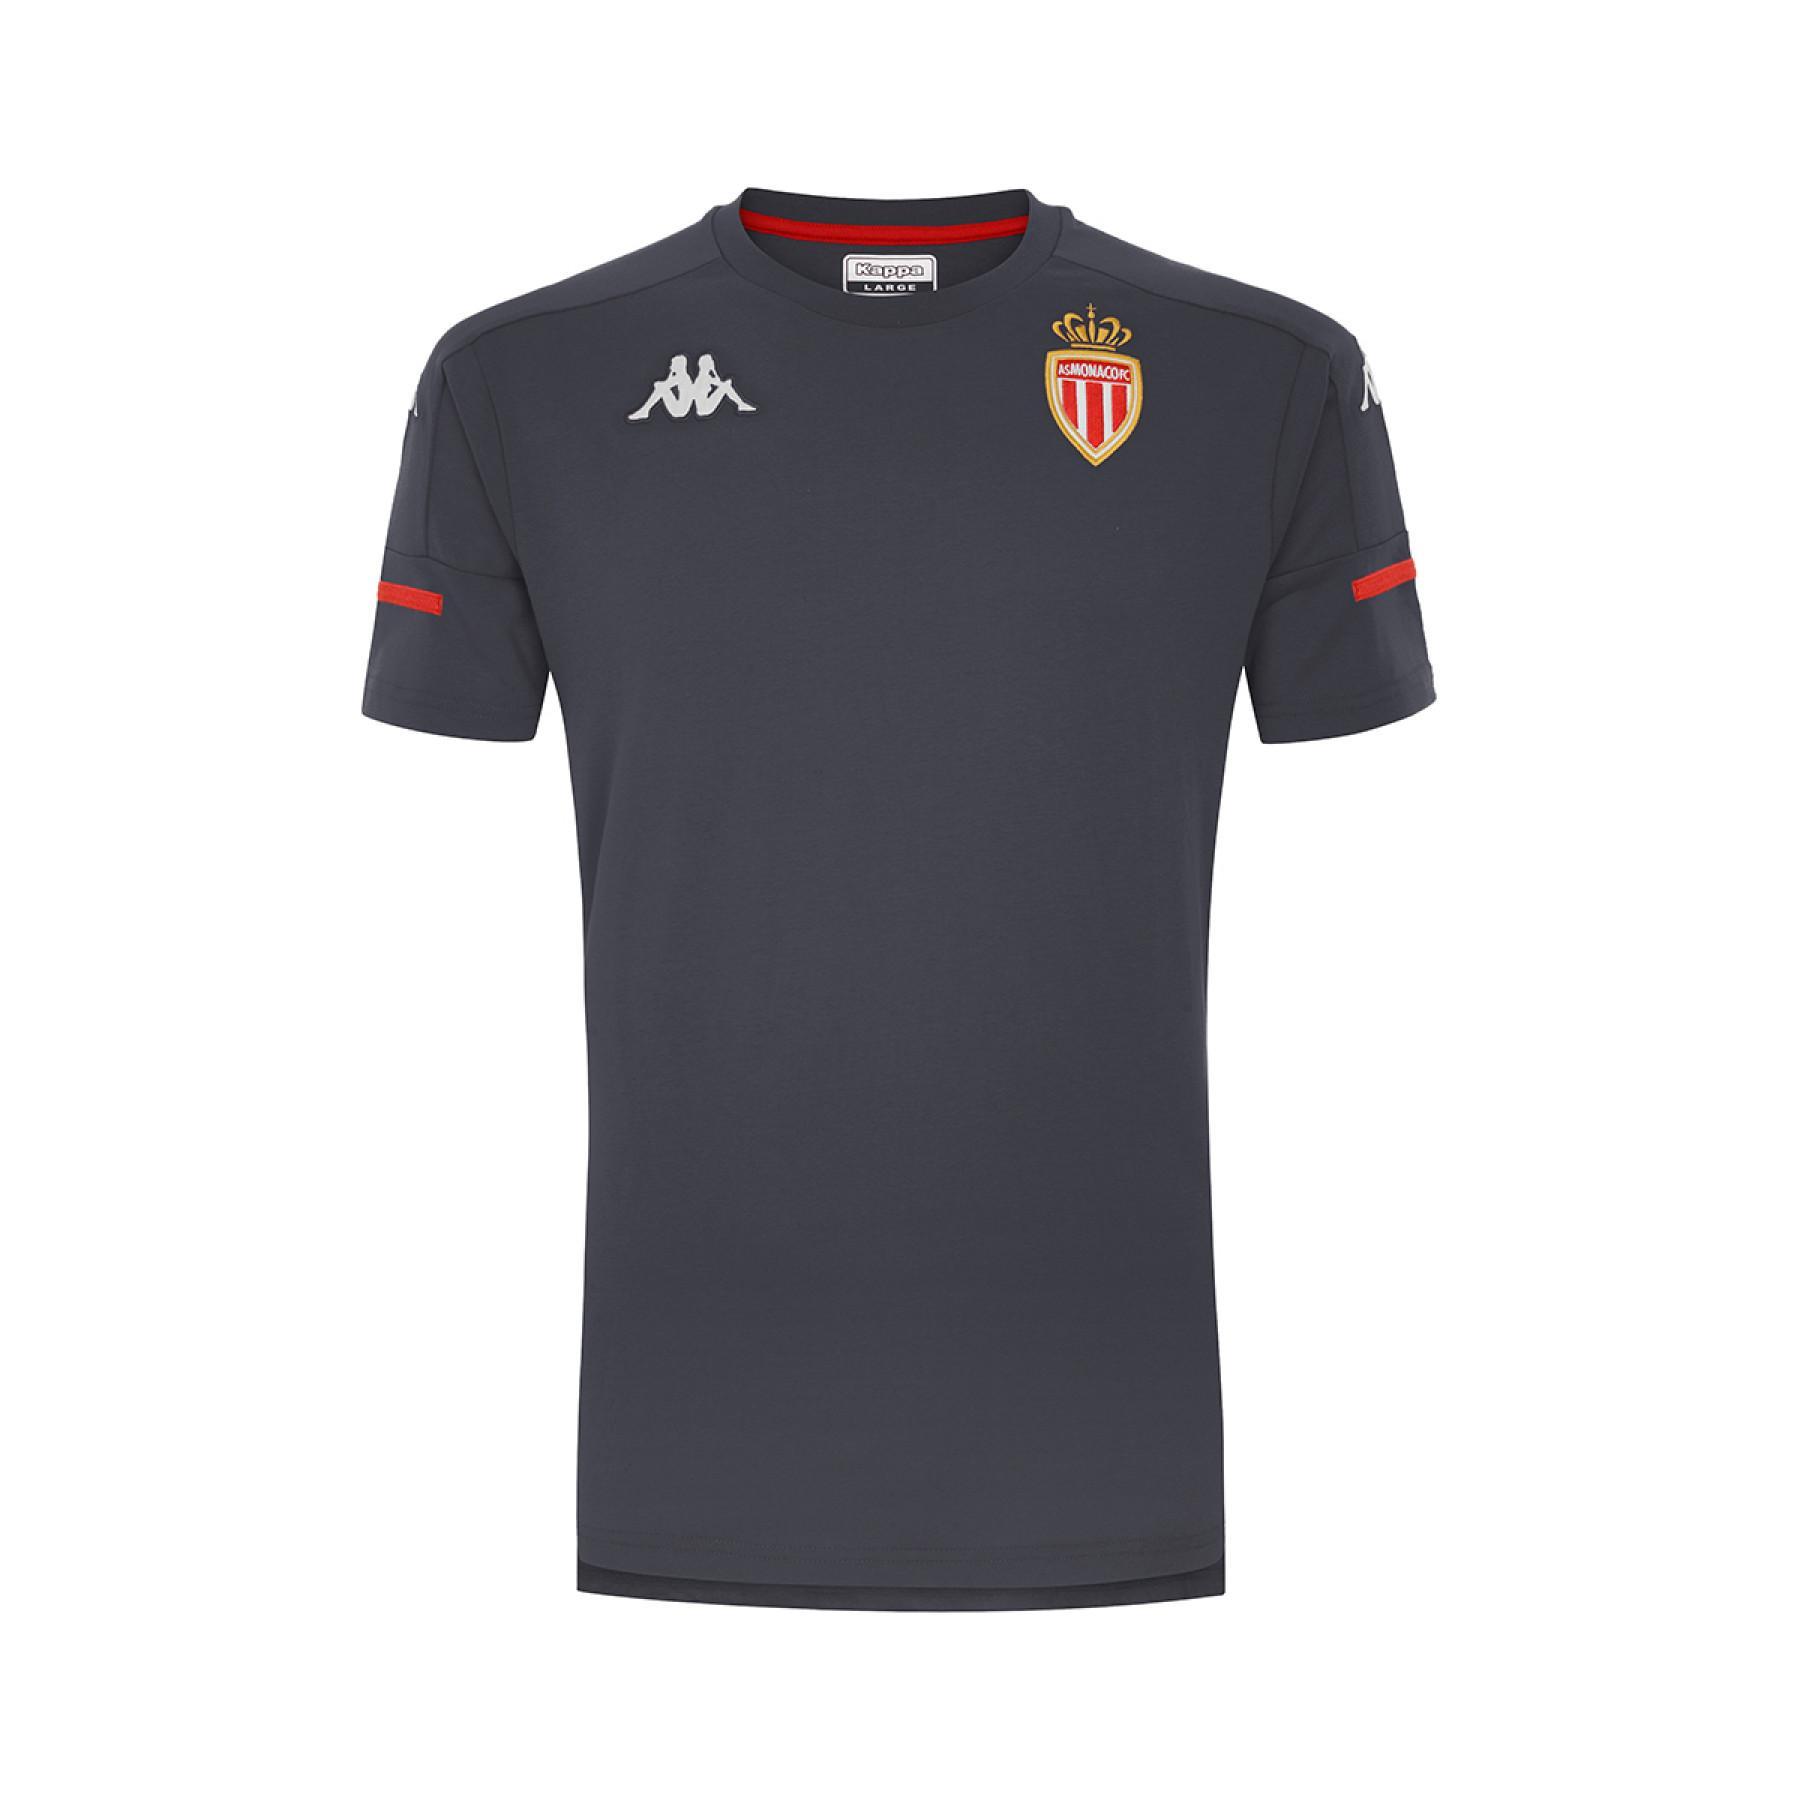 Kinder-T-shirt AS Monaco 2020/21 ayba 4